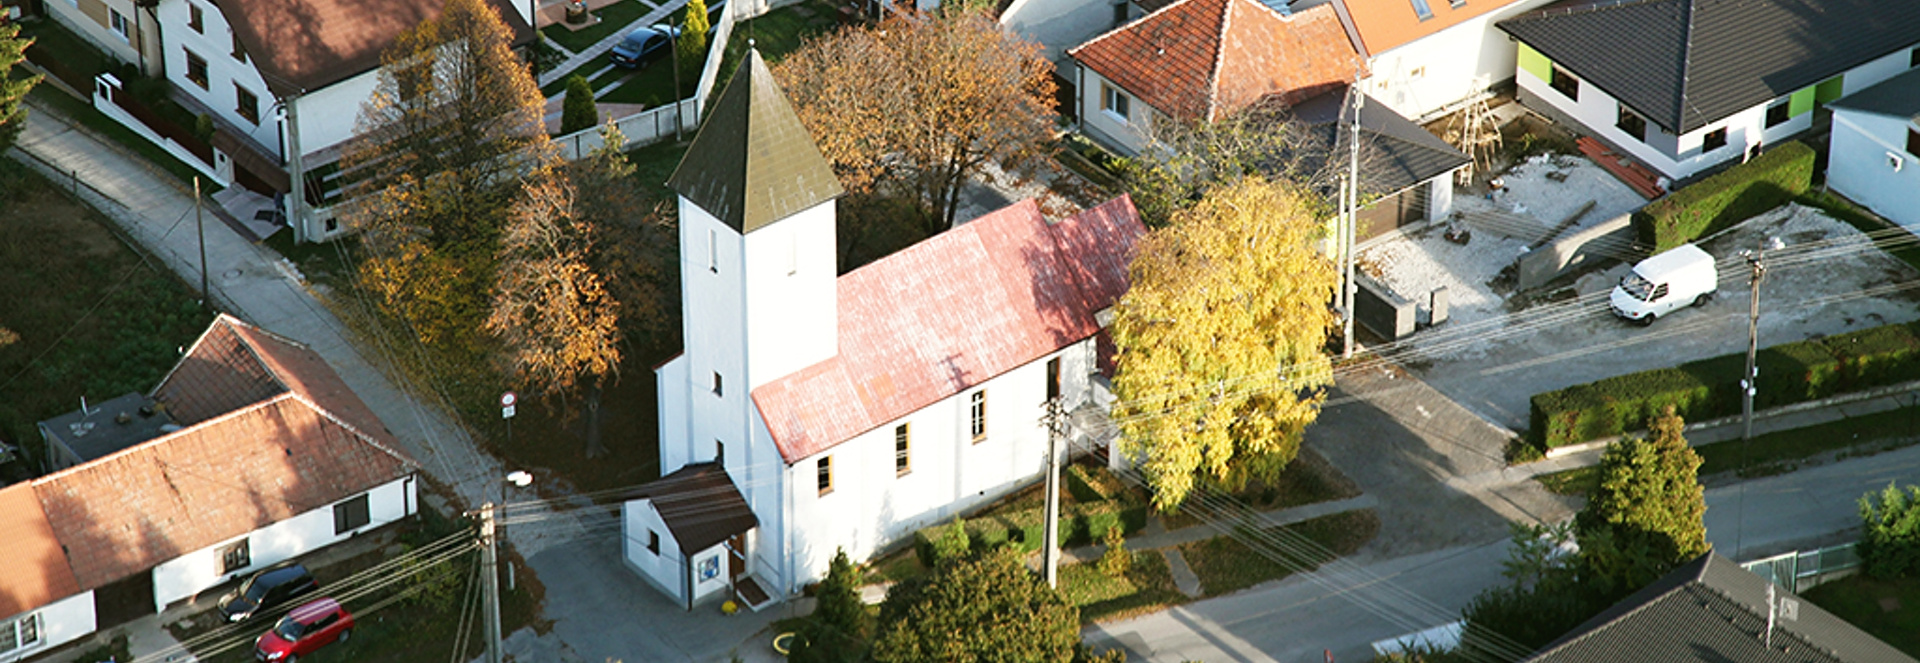 Obec Biely Kostol